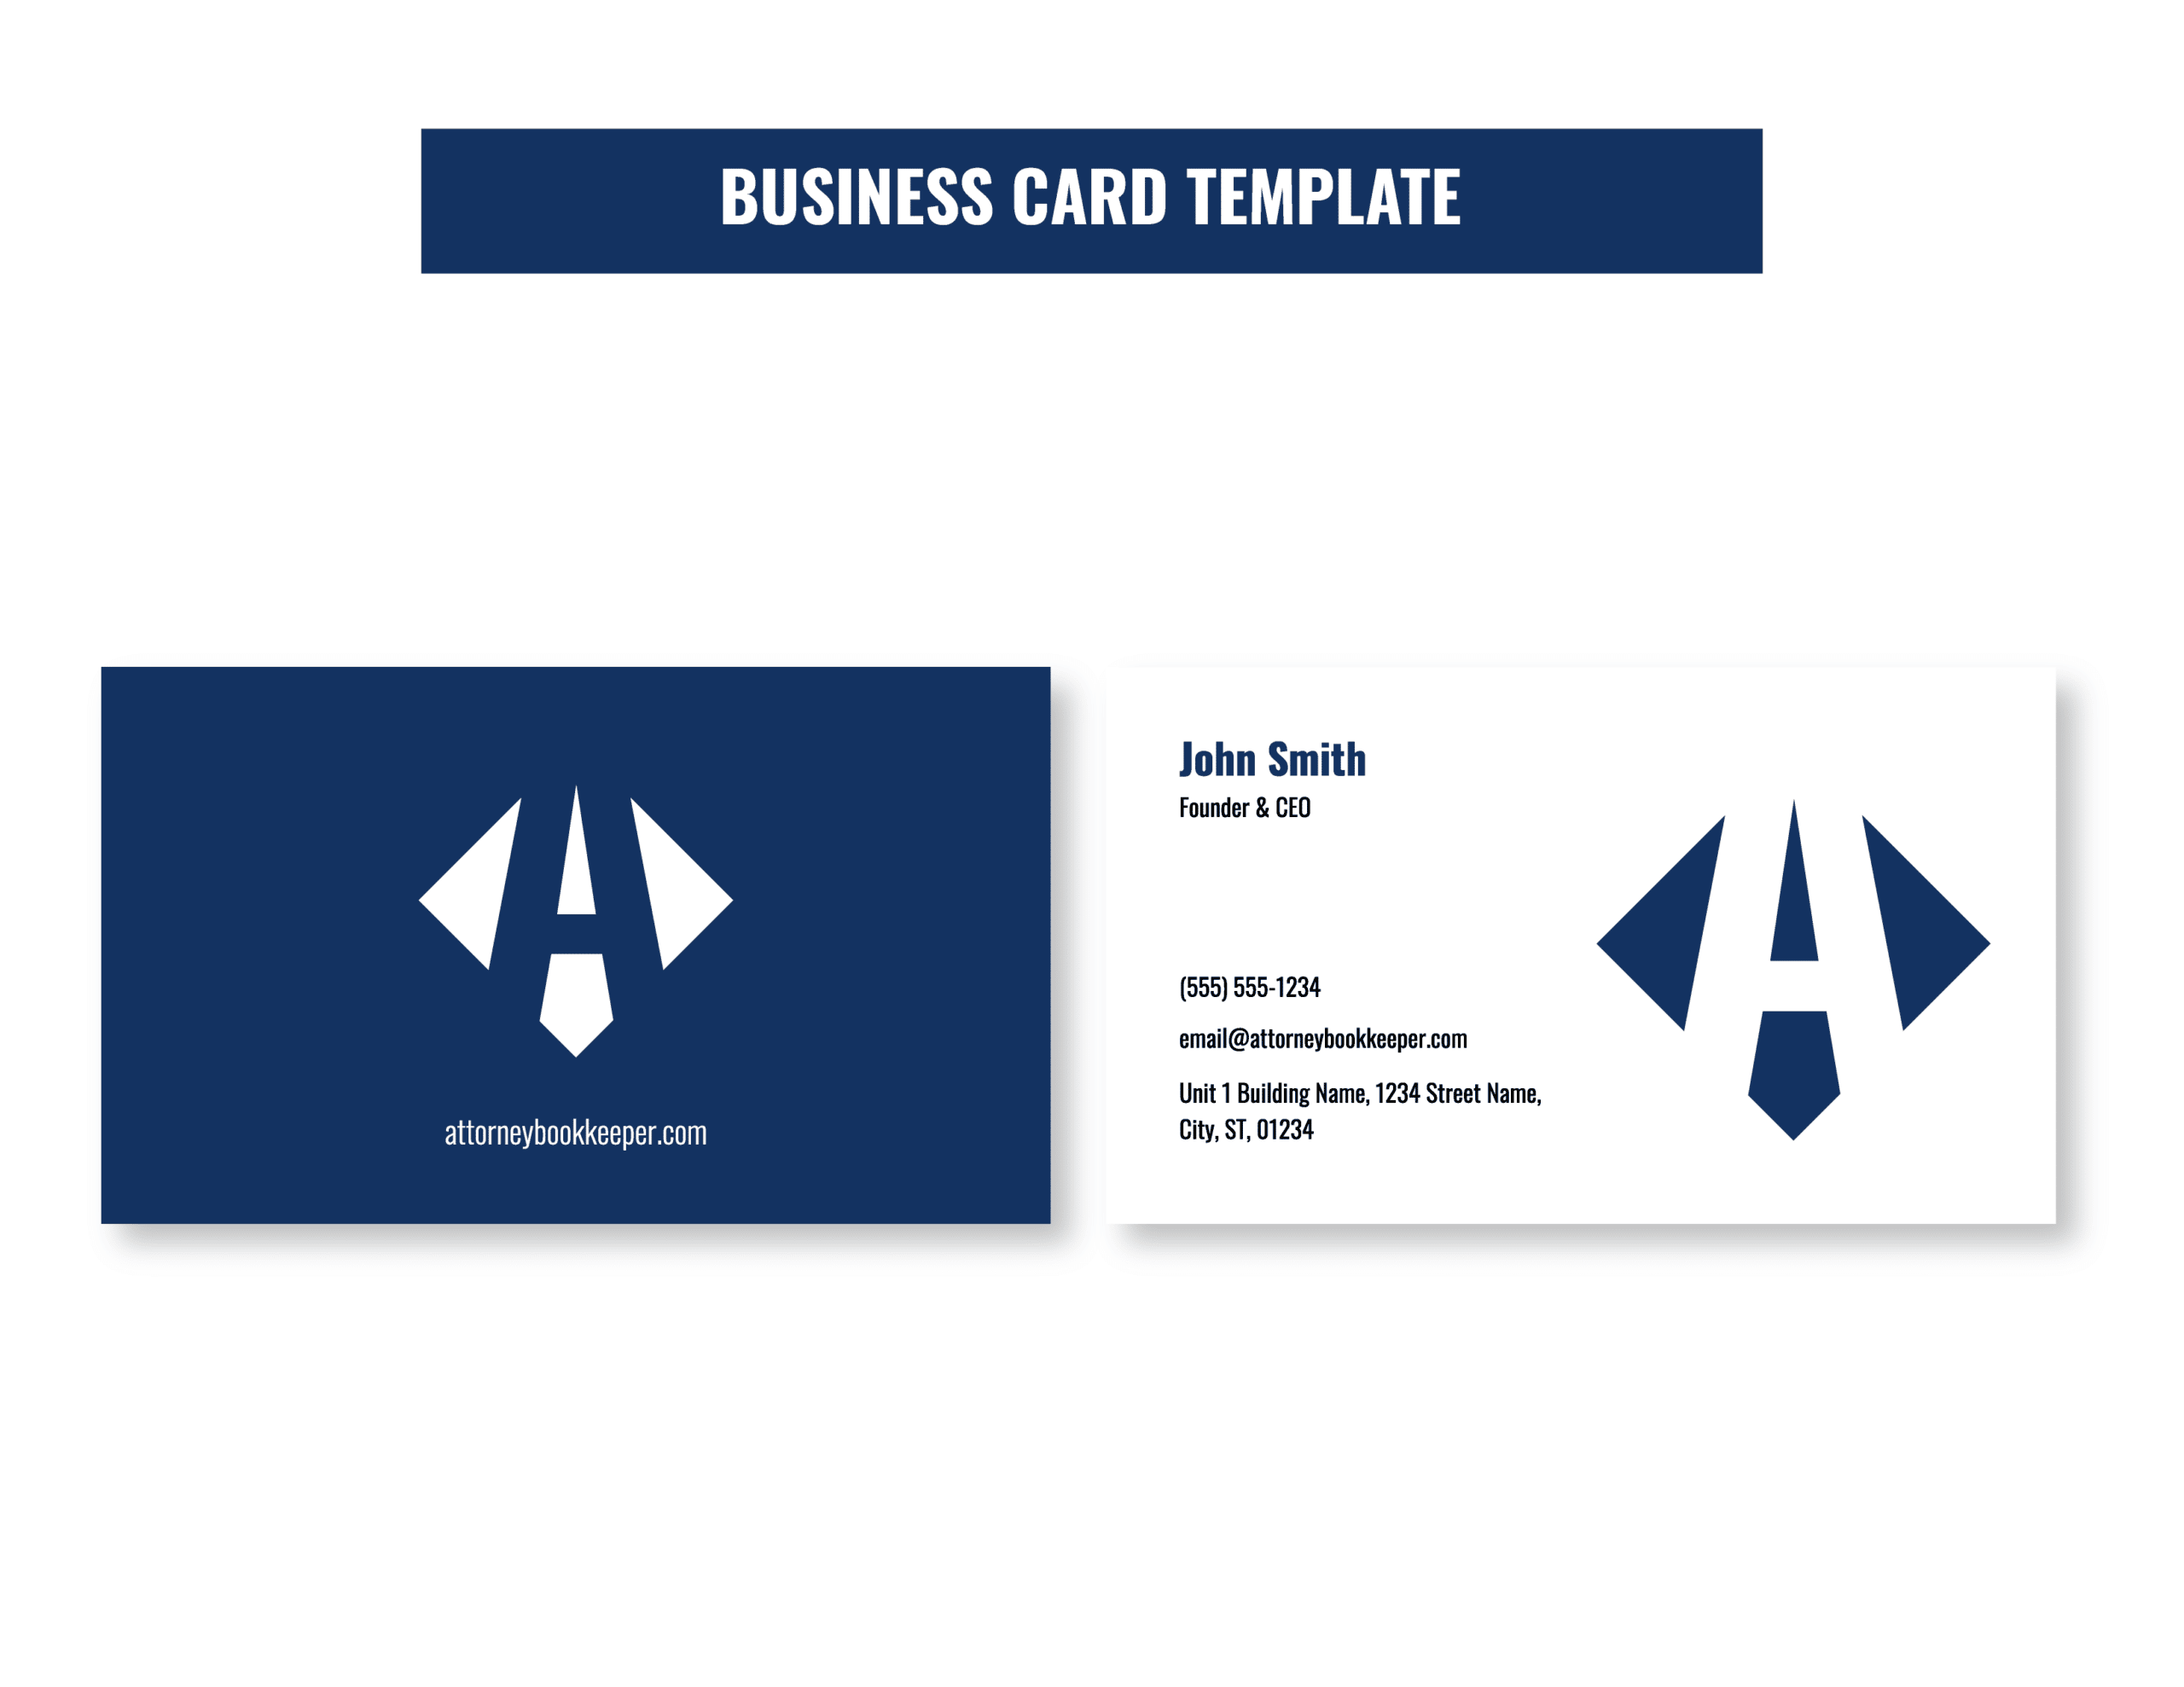 04AttorneyBK__Business Card Template